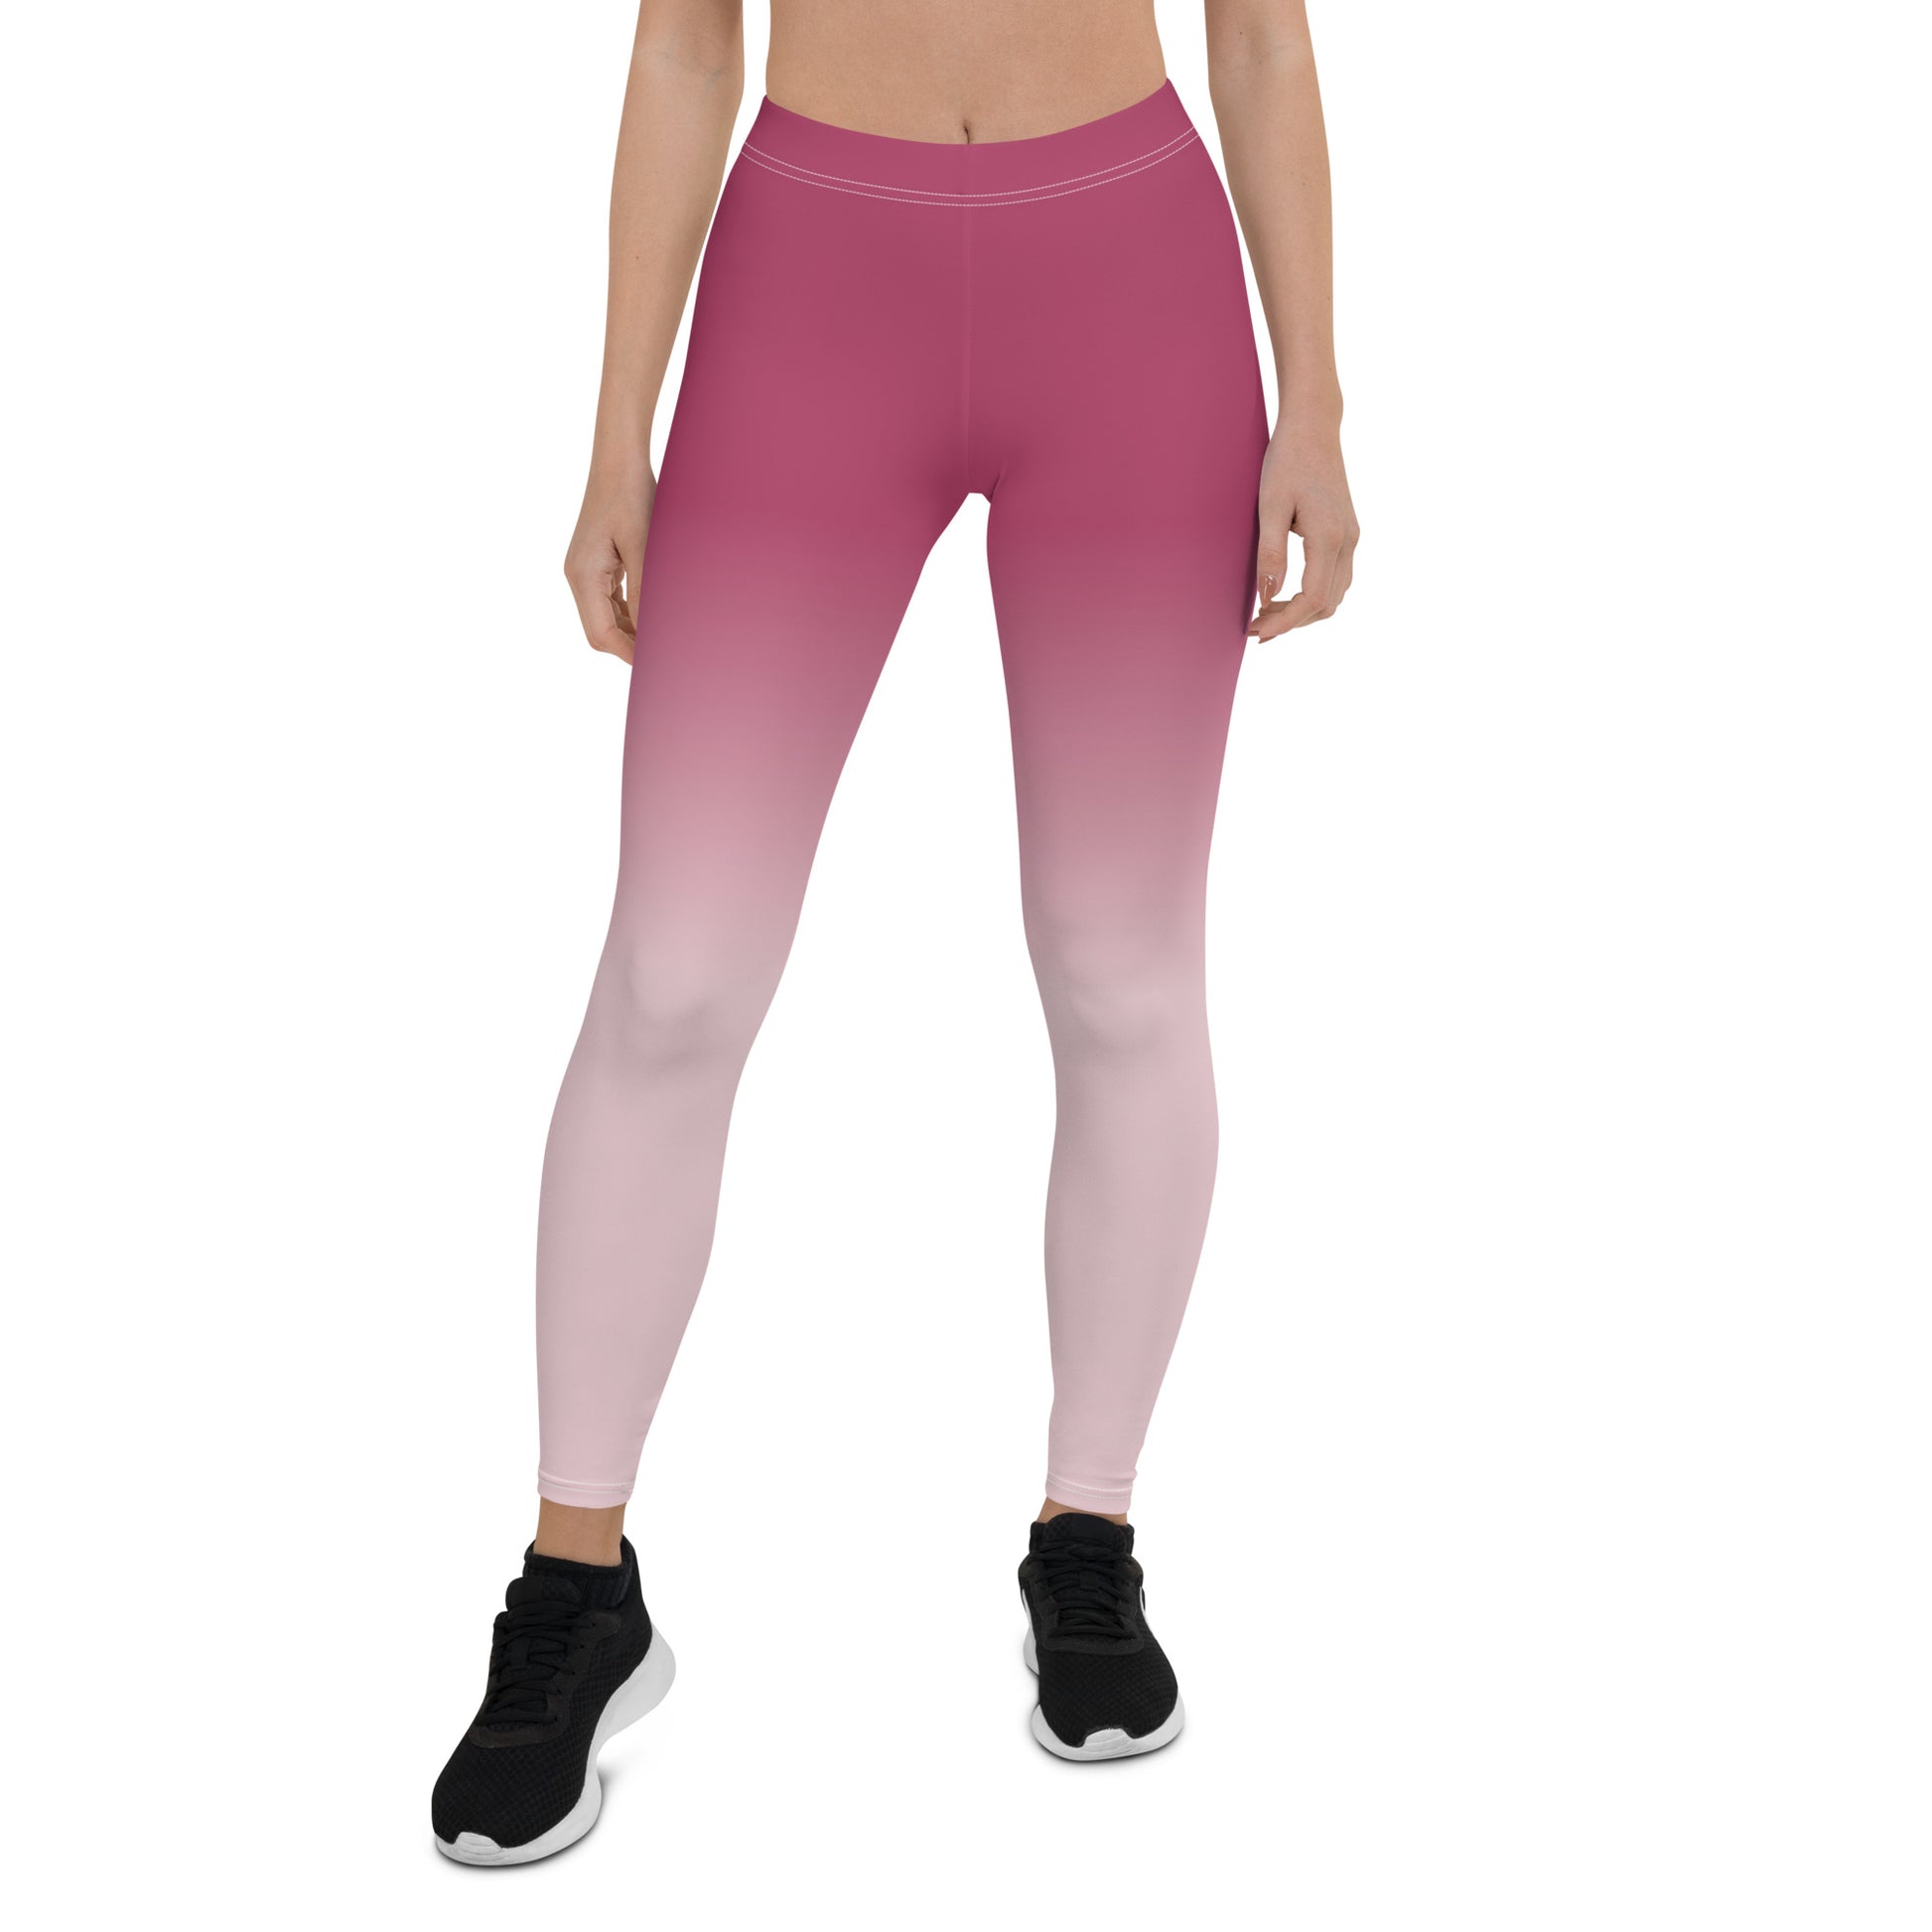 Pink Ombre Leggings Women, Purple Gradient Tie Dye Printed Yoga Pants Cute  Graphic Workout Running Gym Fun Designer Tights Gift